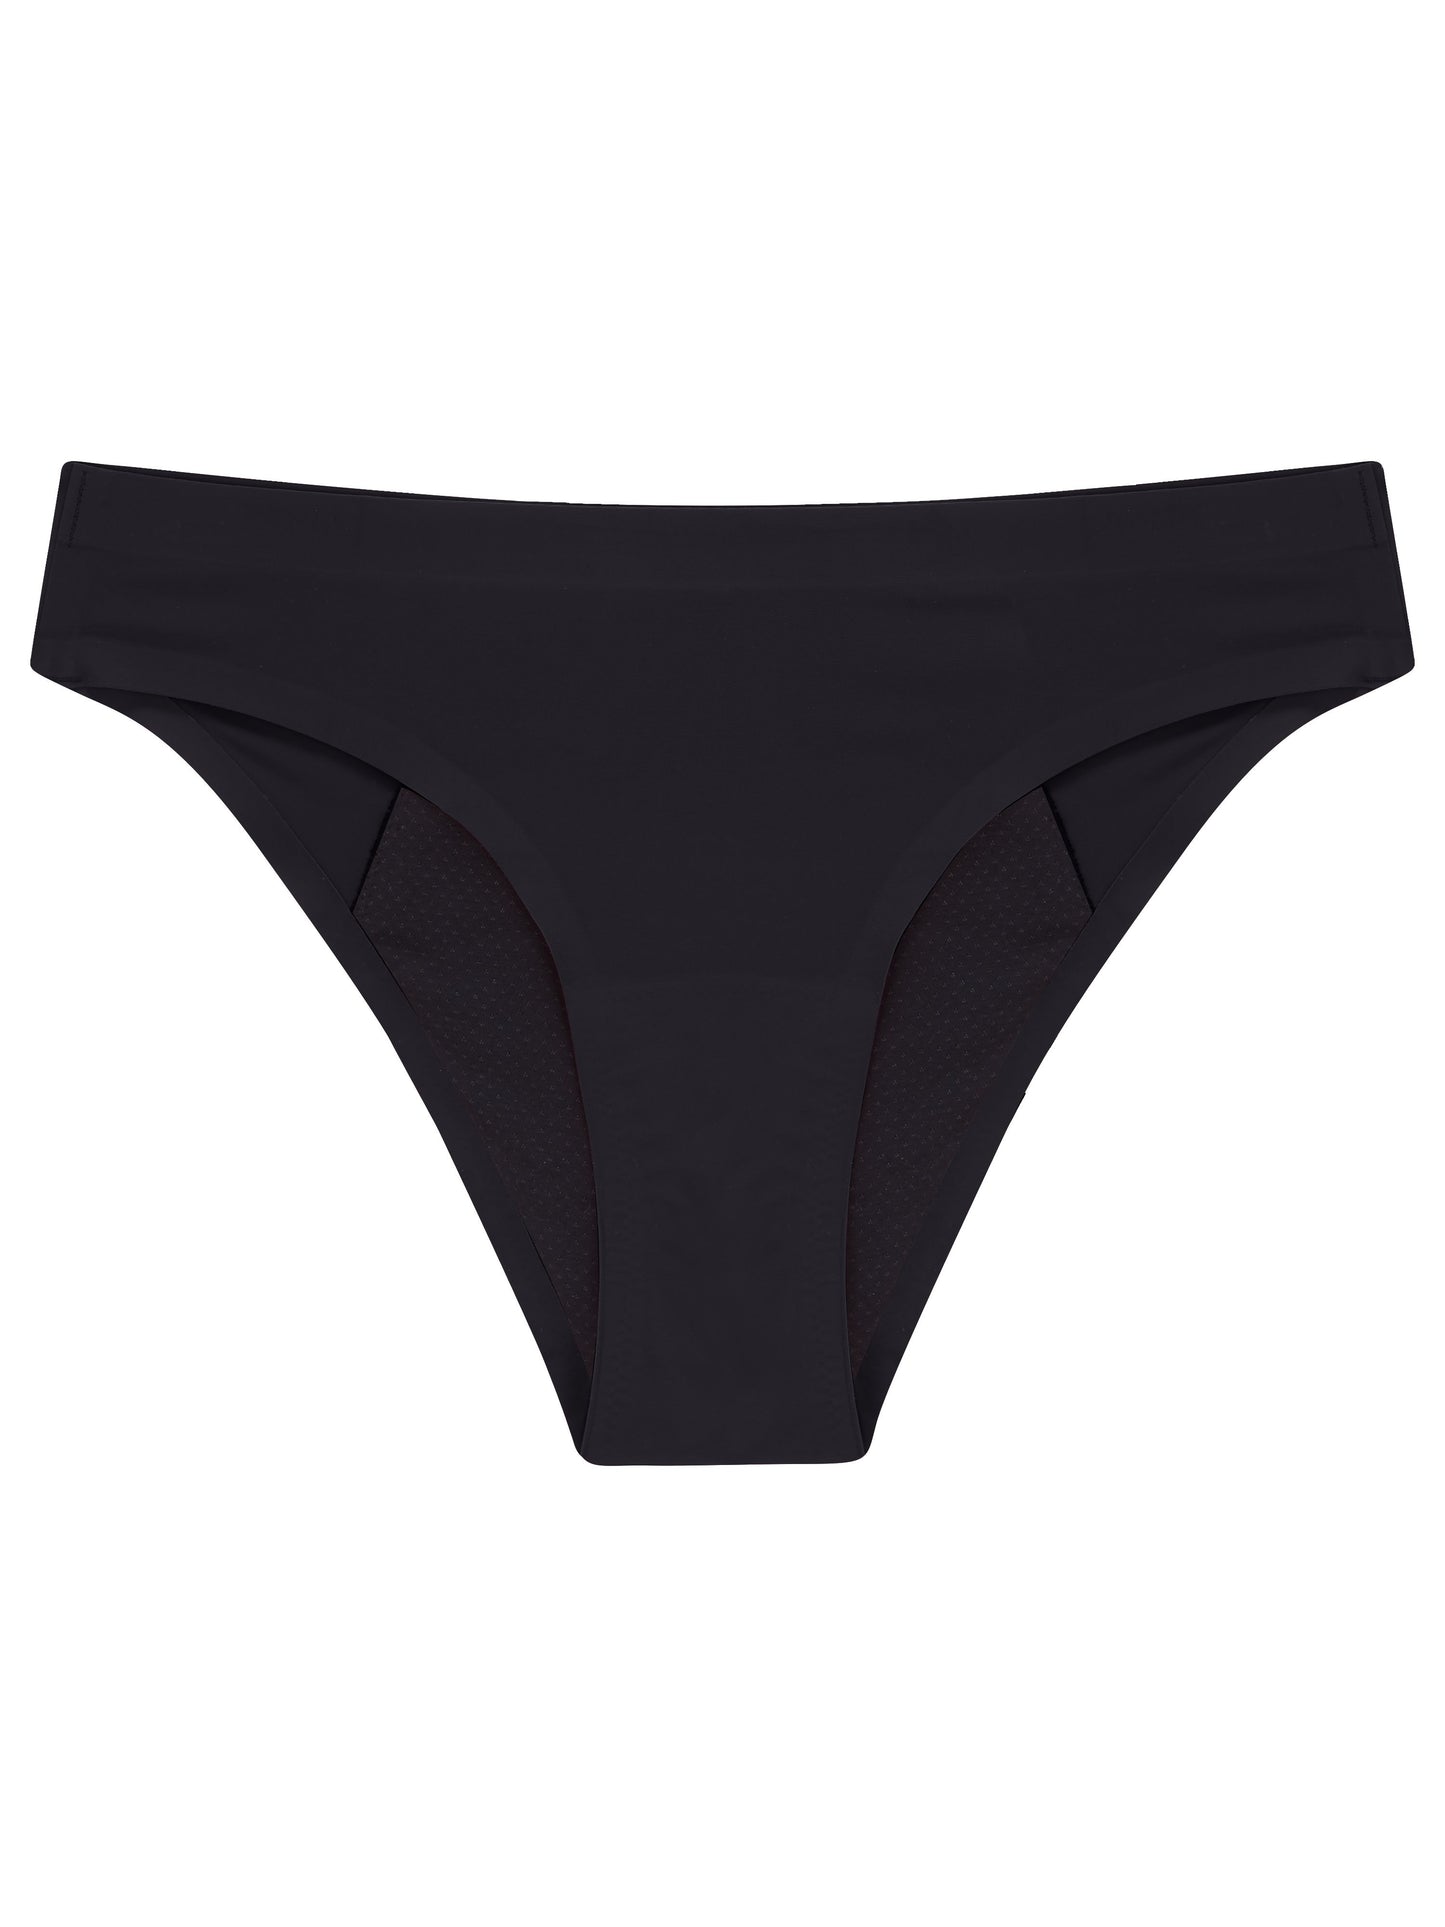 Imaara Feminine Period Underwear Inclusive Knickers. Product Jamuna Onyx Black